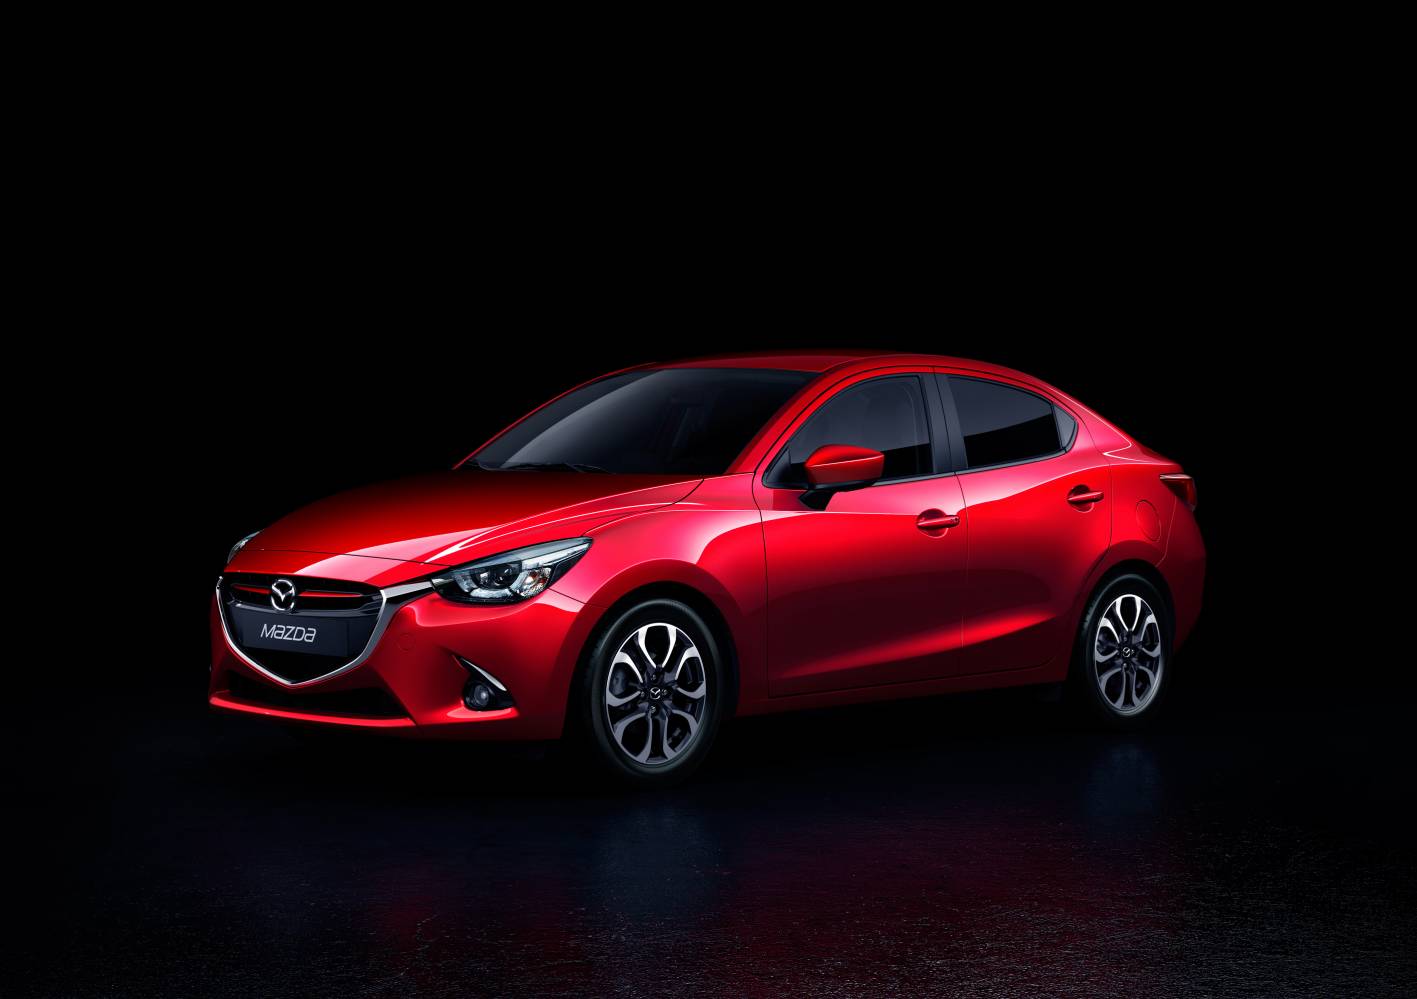 Mazda2 sedan confirmed for Australia - ForceGT.com